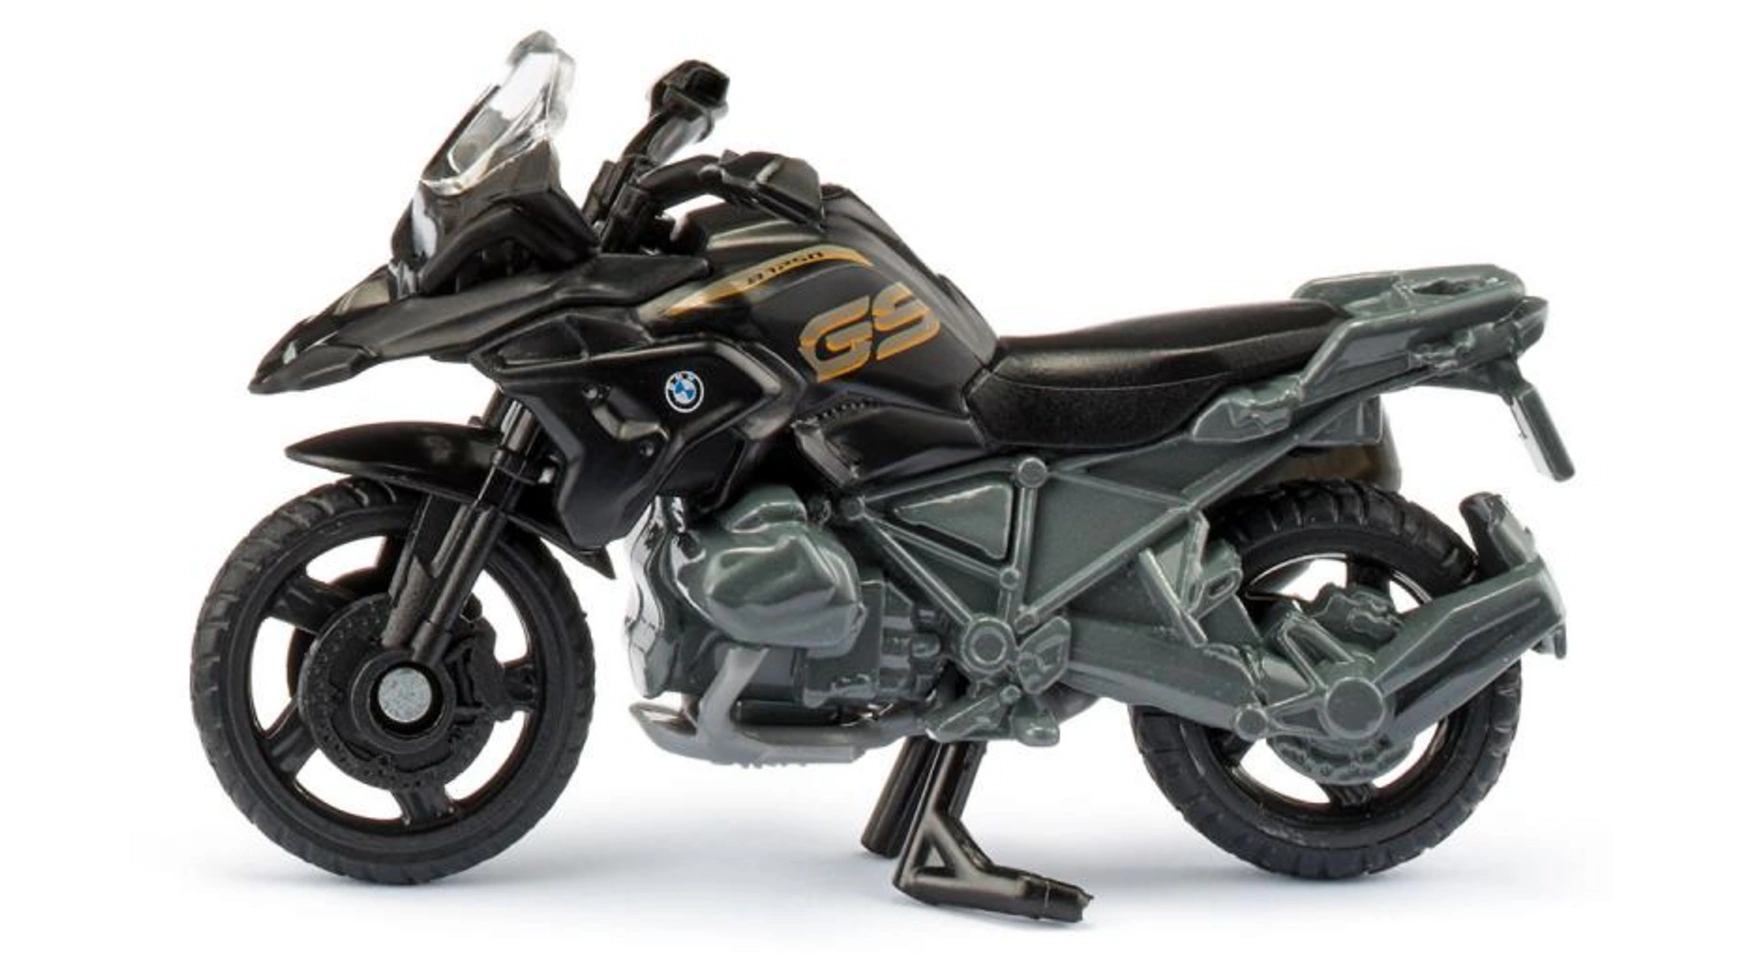 Super bmw r 1250 gs lci Siku r1250rt защитная накладка на ползунок рамы для bmw r 1250 rt 2022 r1250 rt защитные аксессуары для мотоциклов